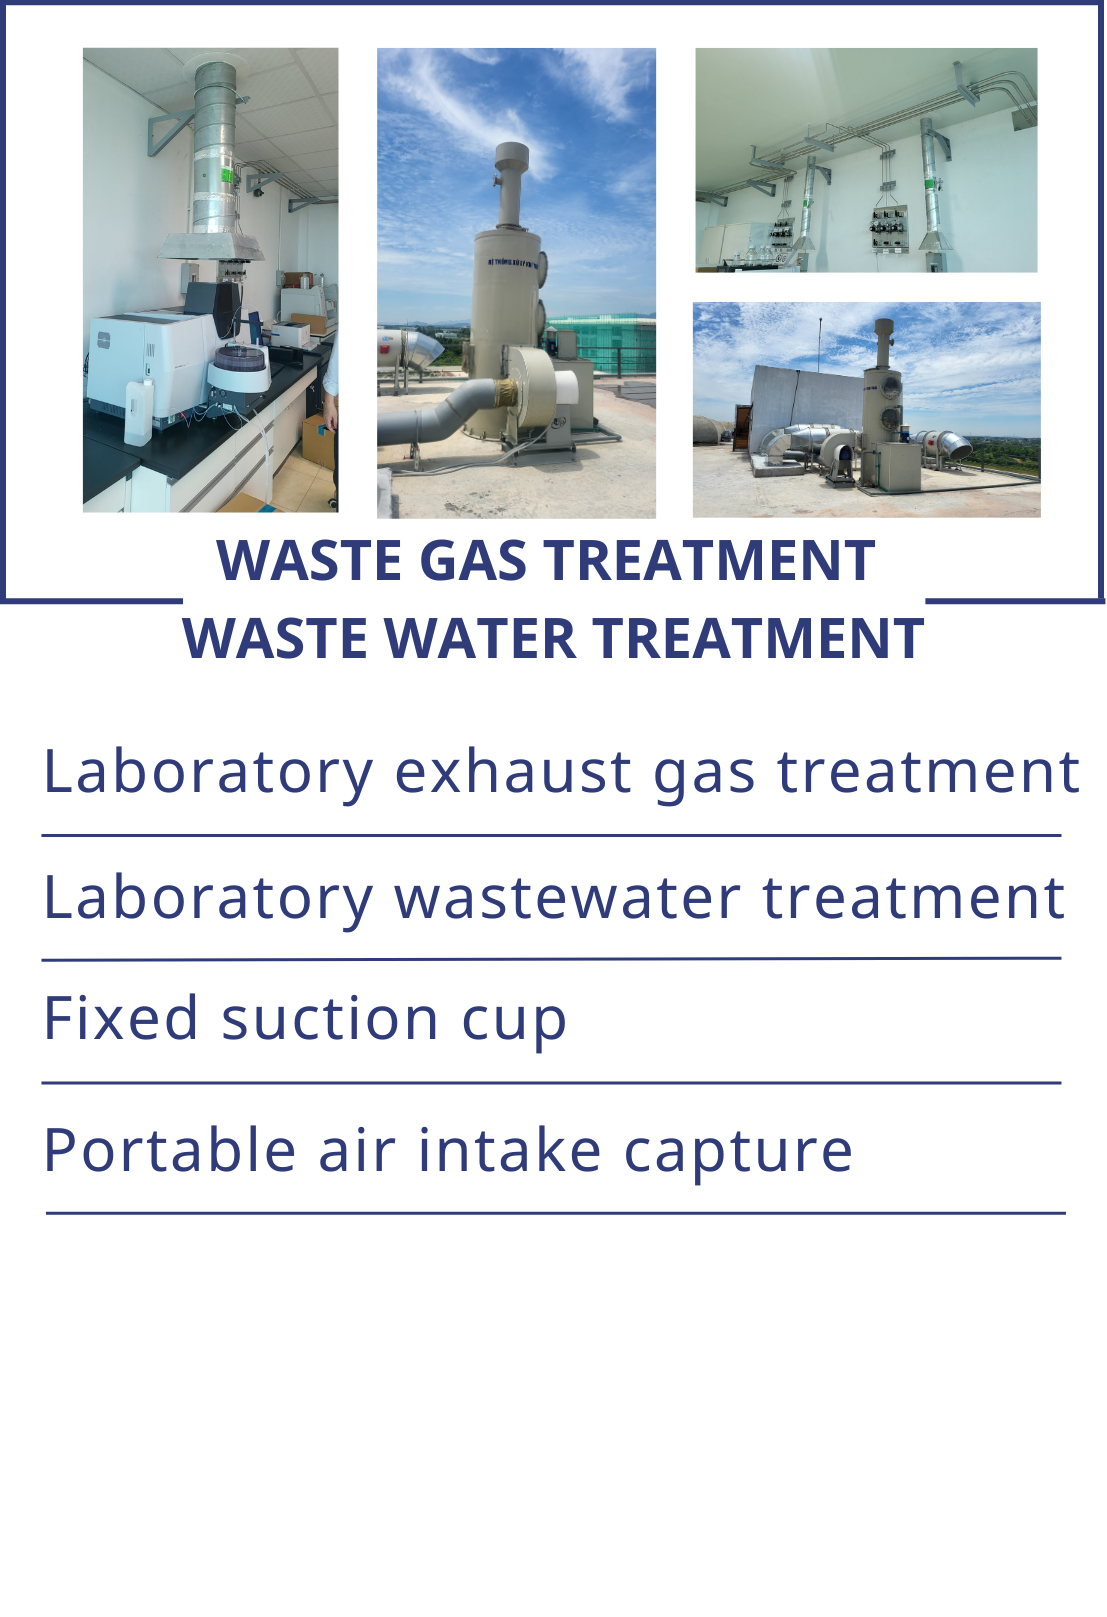 Wastewater treatment - Waste gas treatment